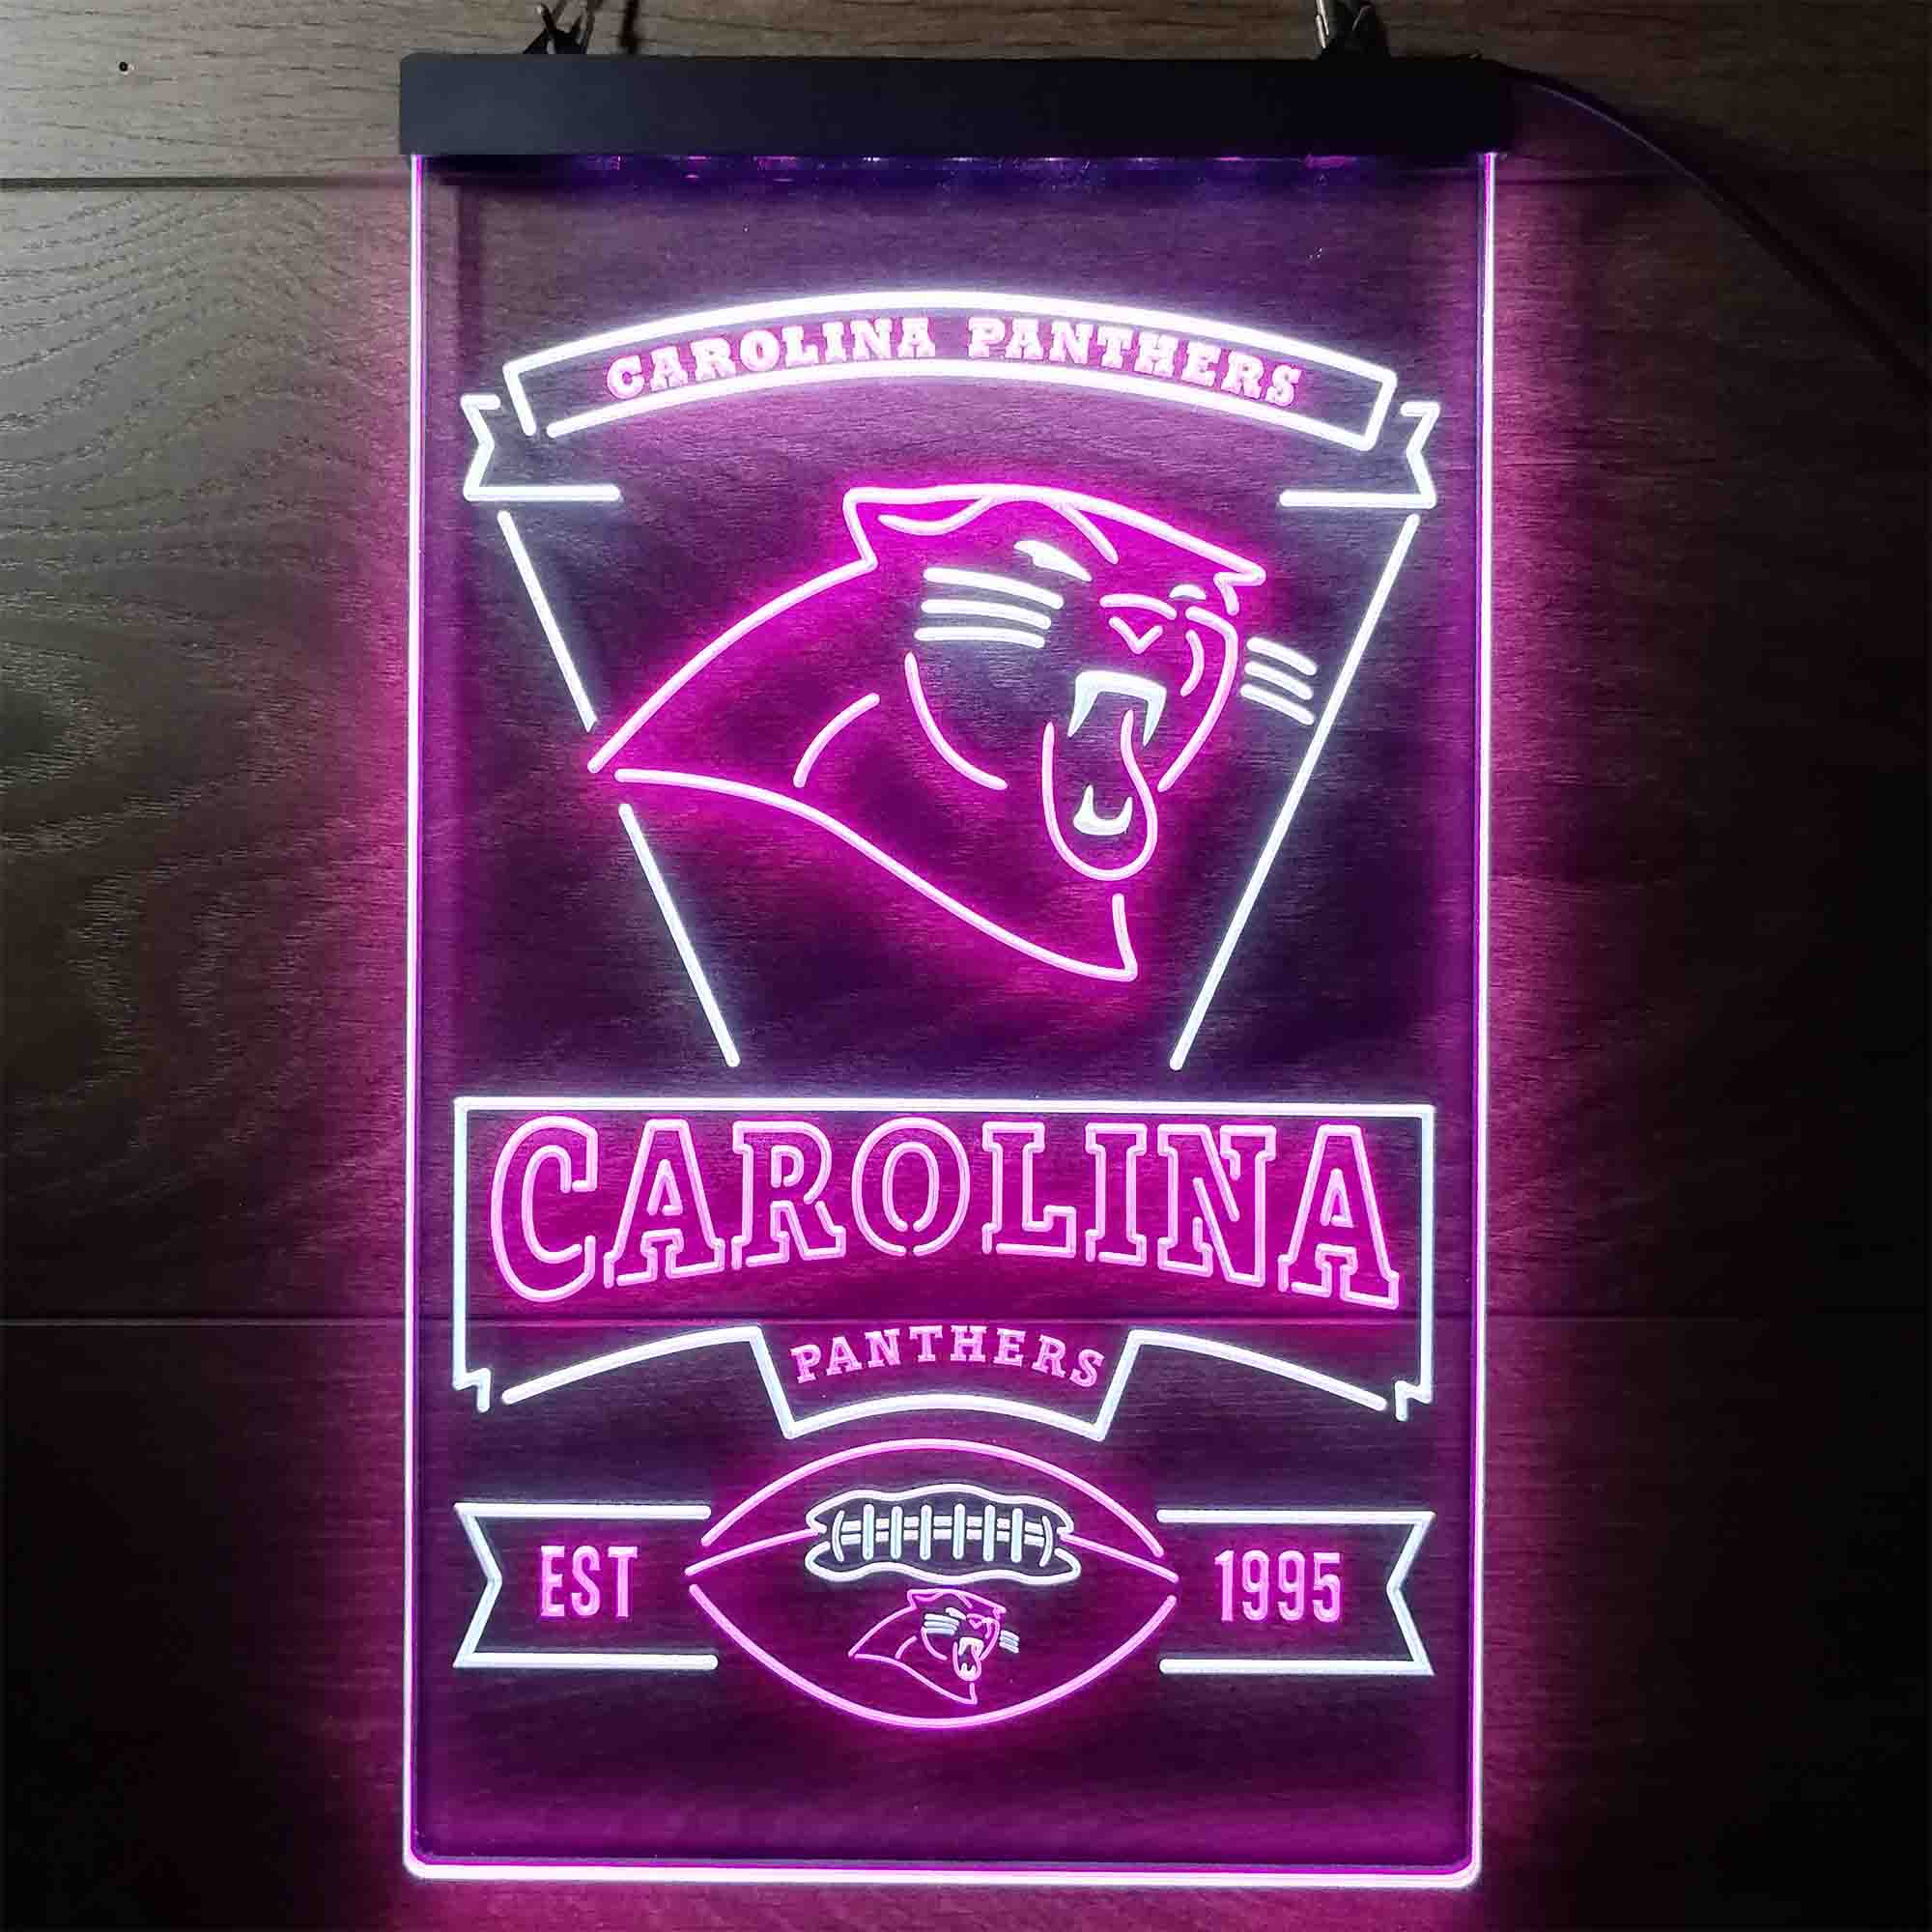 Carolina Panthers EST 1995 Neon LED Sign